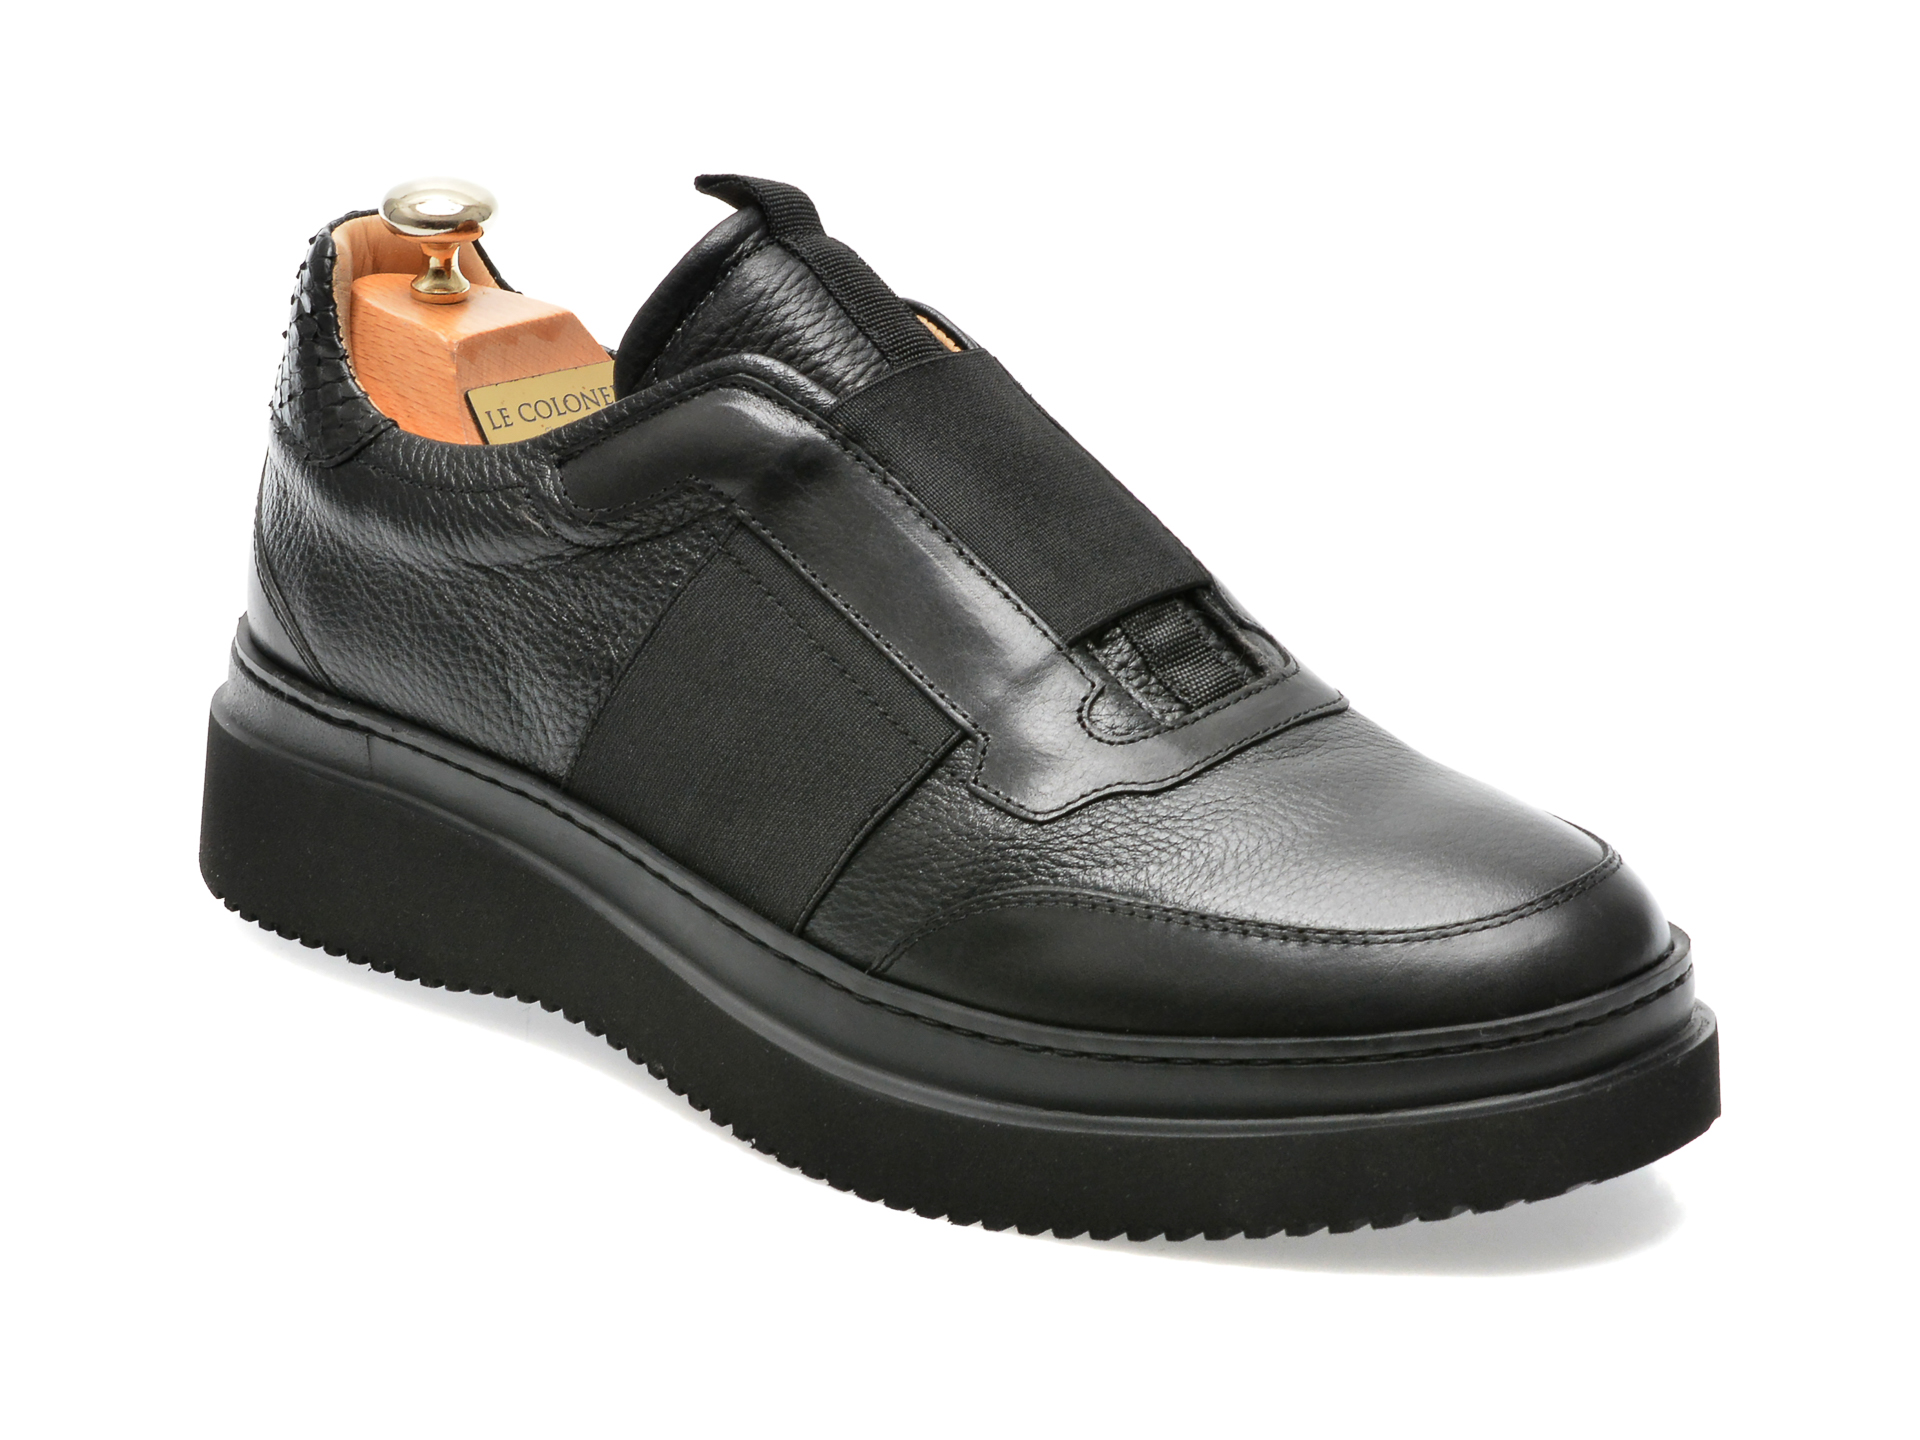 Pantofi LE COLONEL negri, 64833, din piele naturala /barbati/pantofi